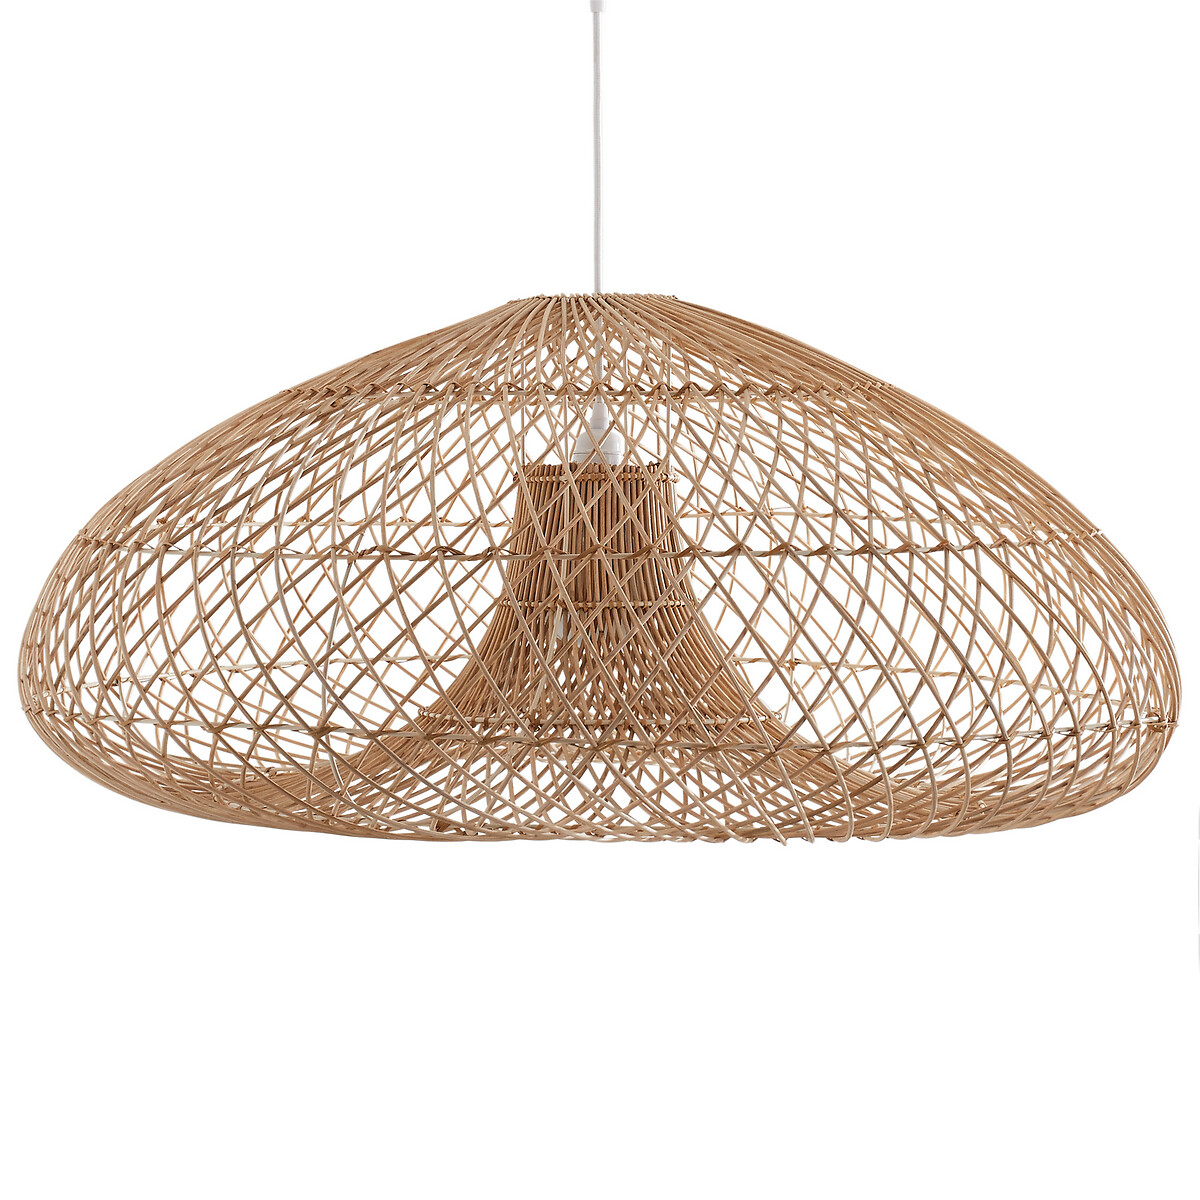 Titou Rattan Ceiling Light Natural Am, Gottorp Pendant Lamp Shade Bamboo